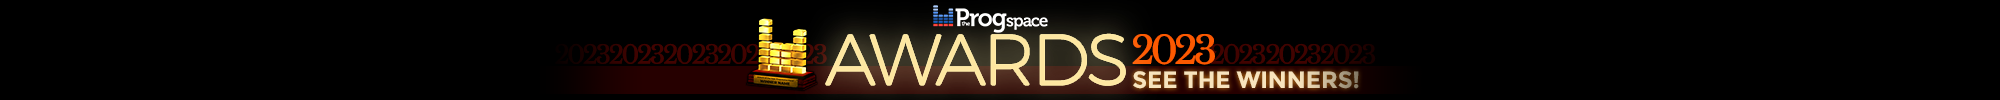 The Progspace Awards 2022